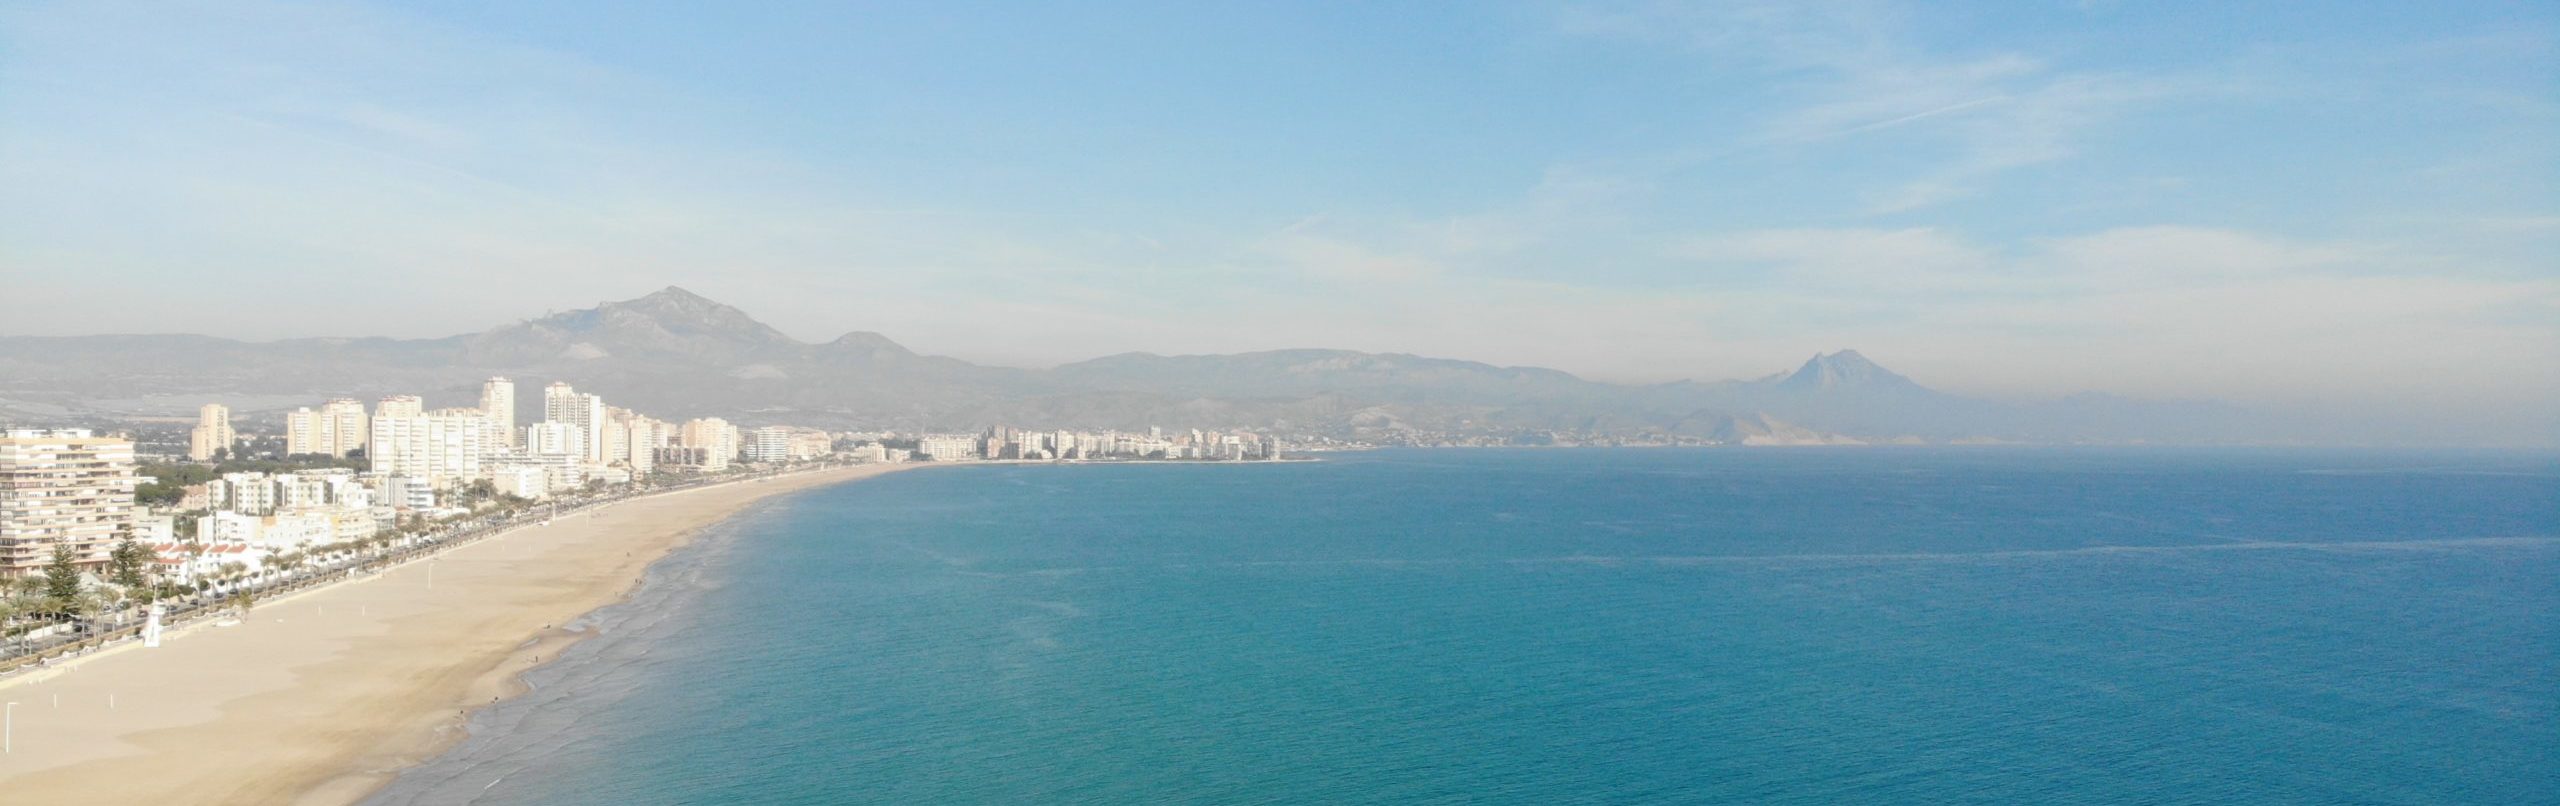 Playa Muchavista from the air